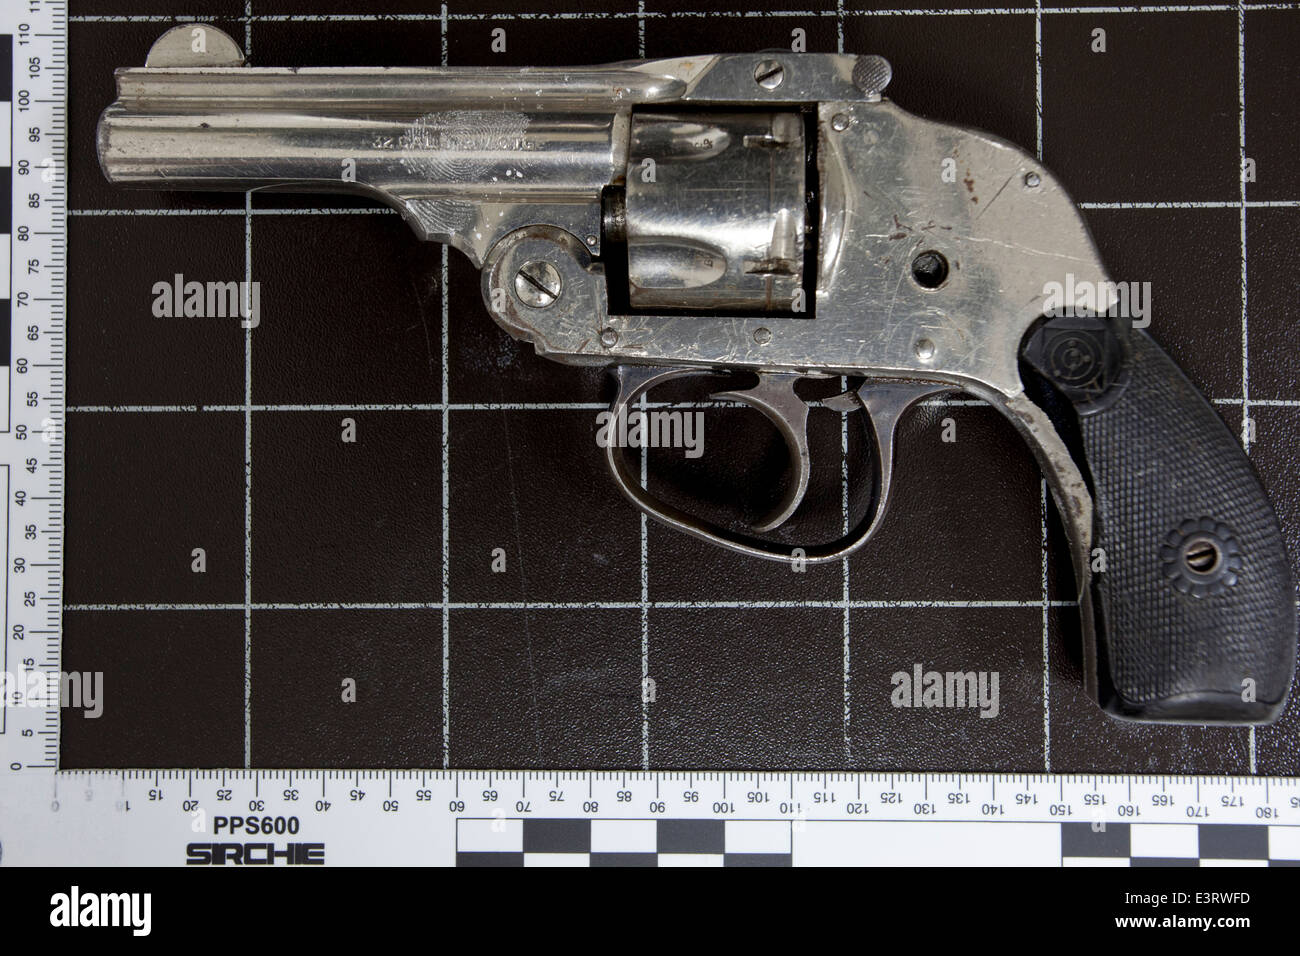 Handgun after treatment for fingerprints using florescence powder prior to being photographed under ultraviolet light Stock Photo